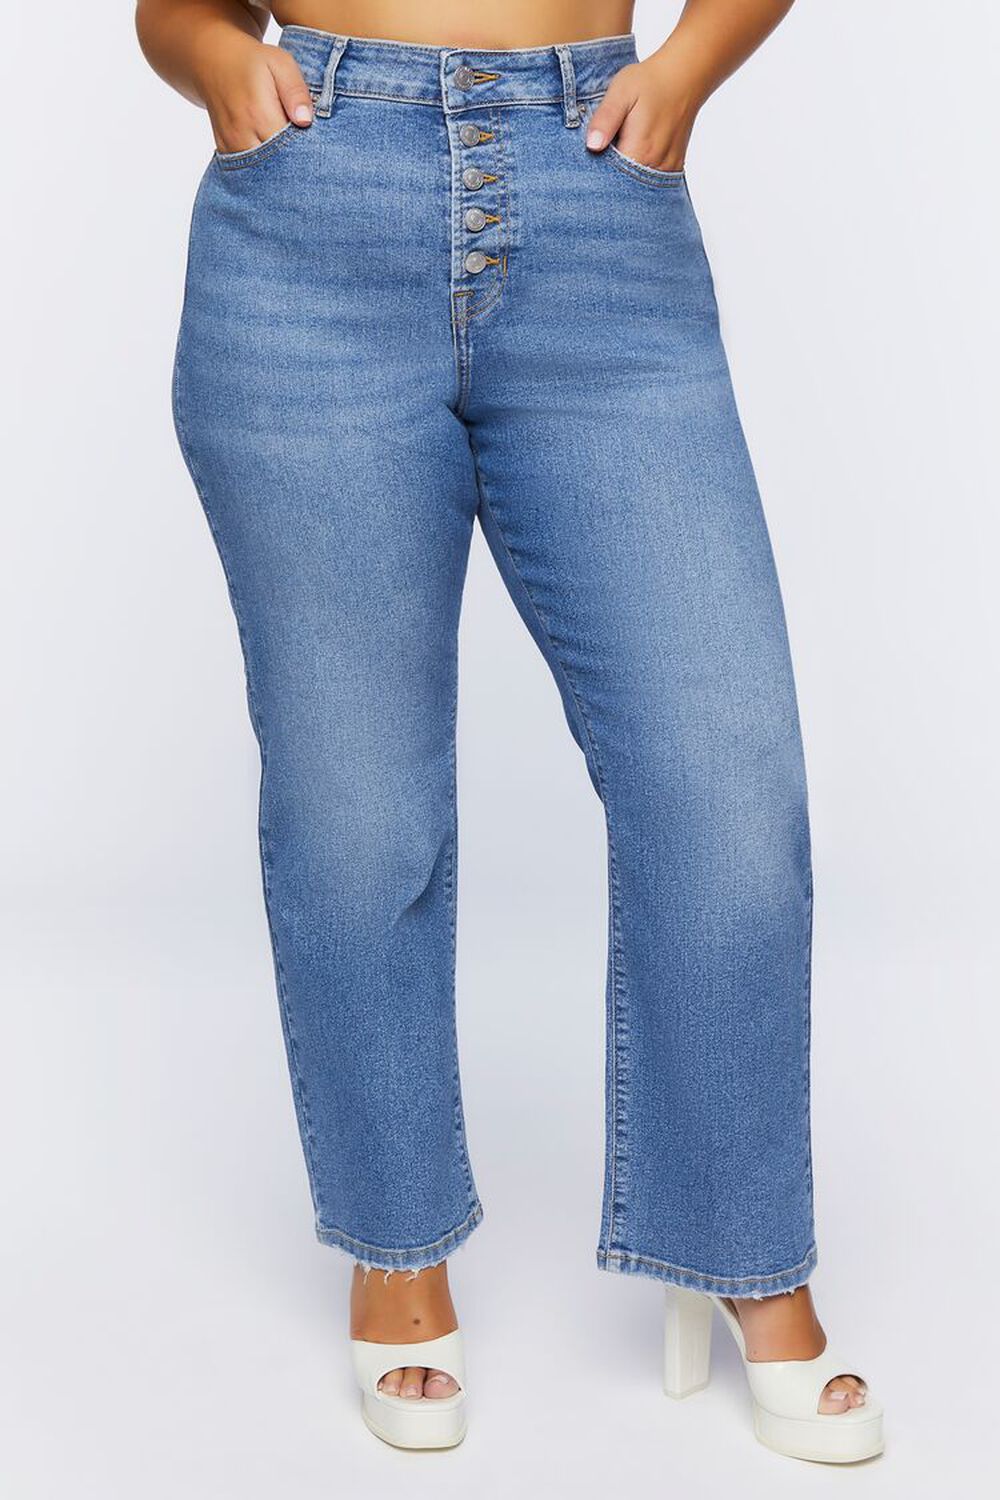 MEDIUM DENIM Plus Size High-Rise Straight-Leg Jeans, image 2